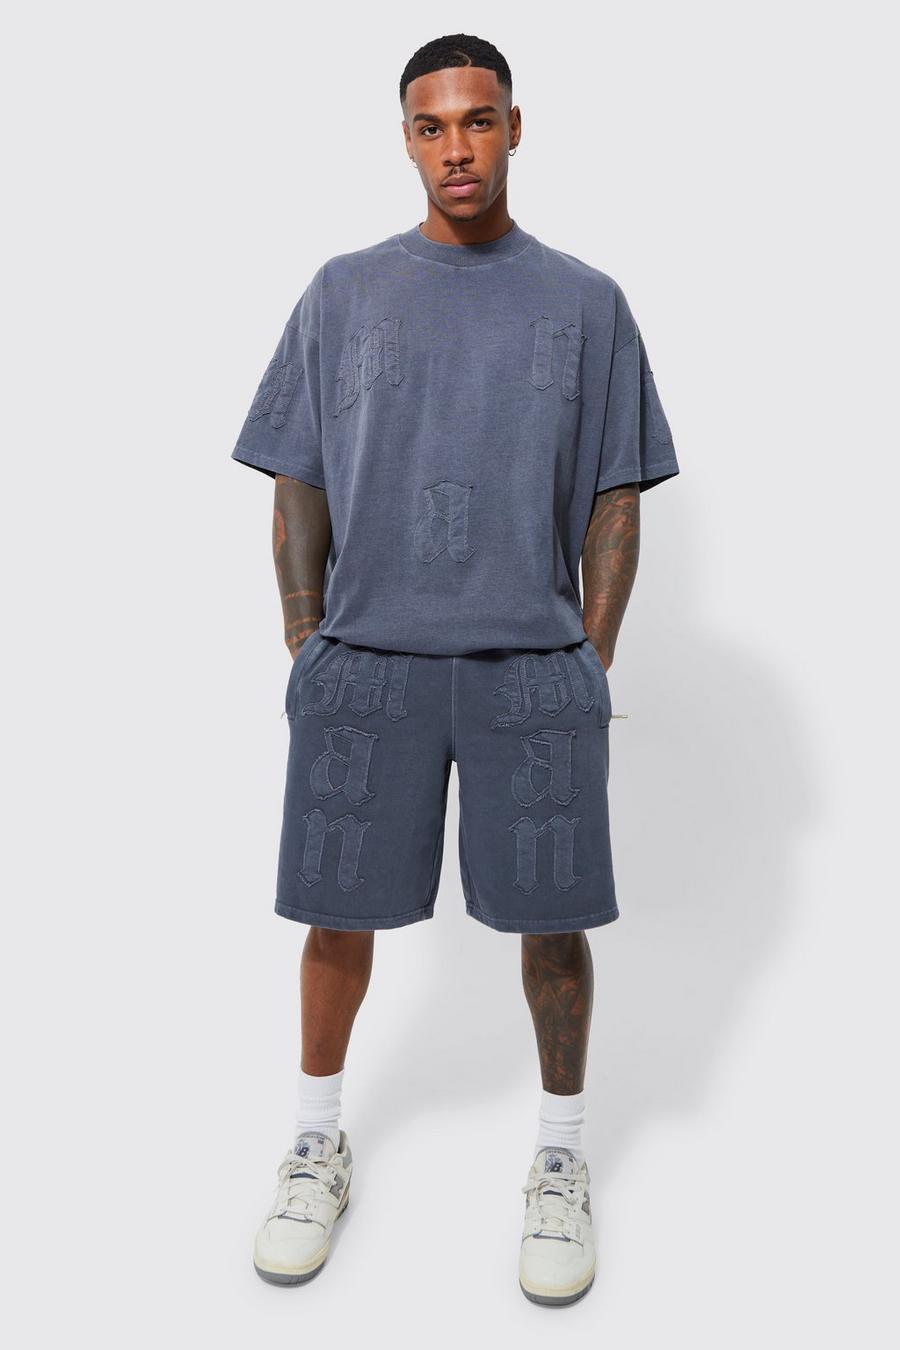 Charcoal gris Oversized Man Applique Washed T-shirt & Short Set 